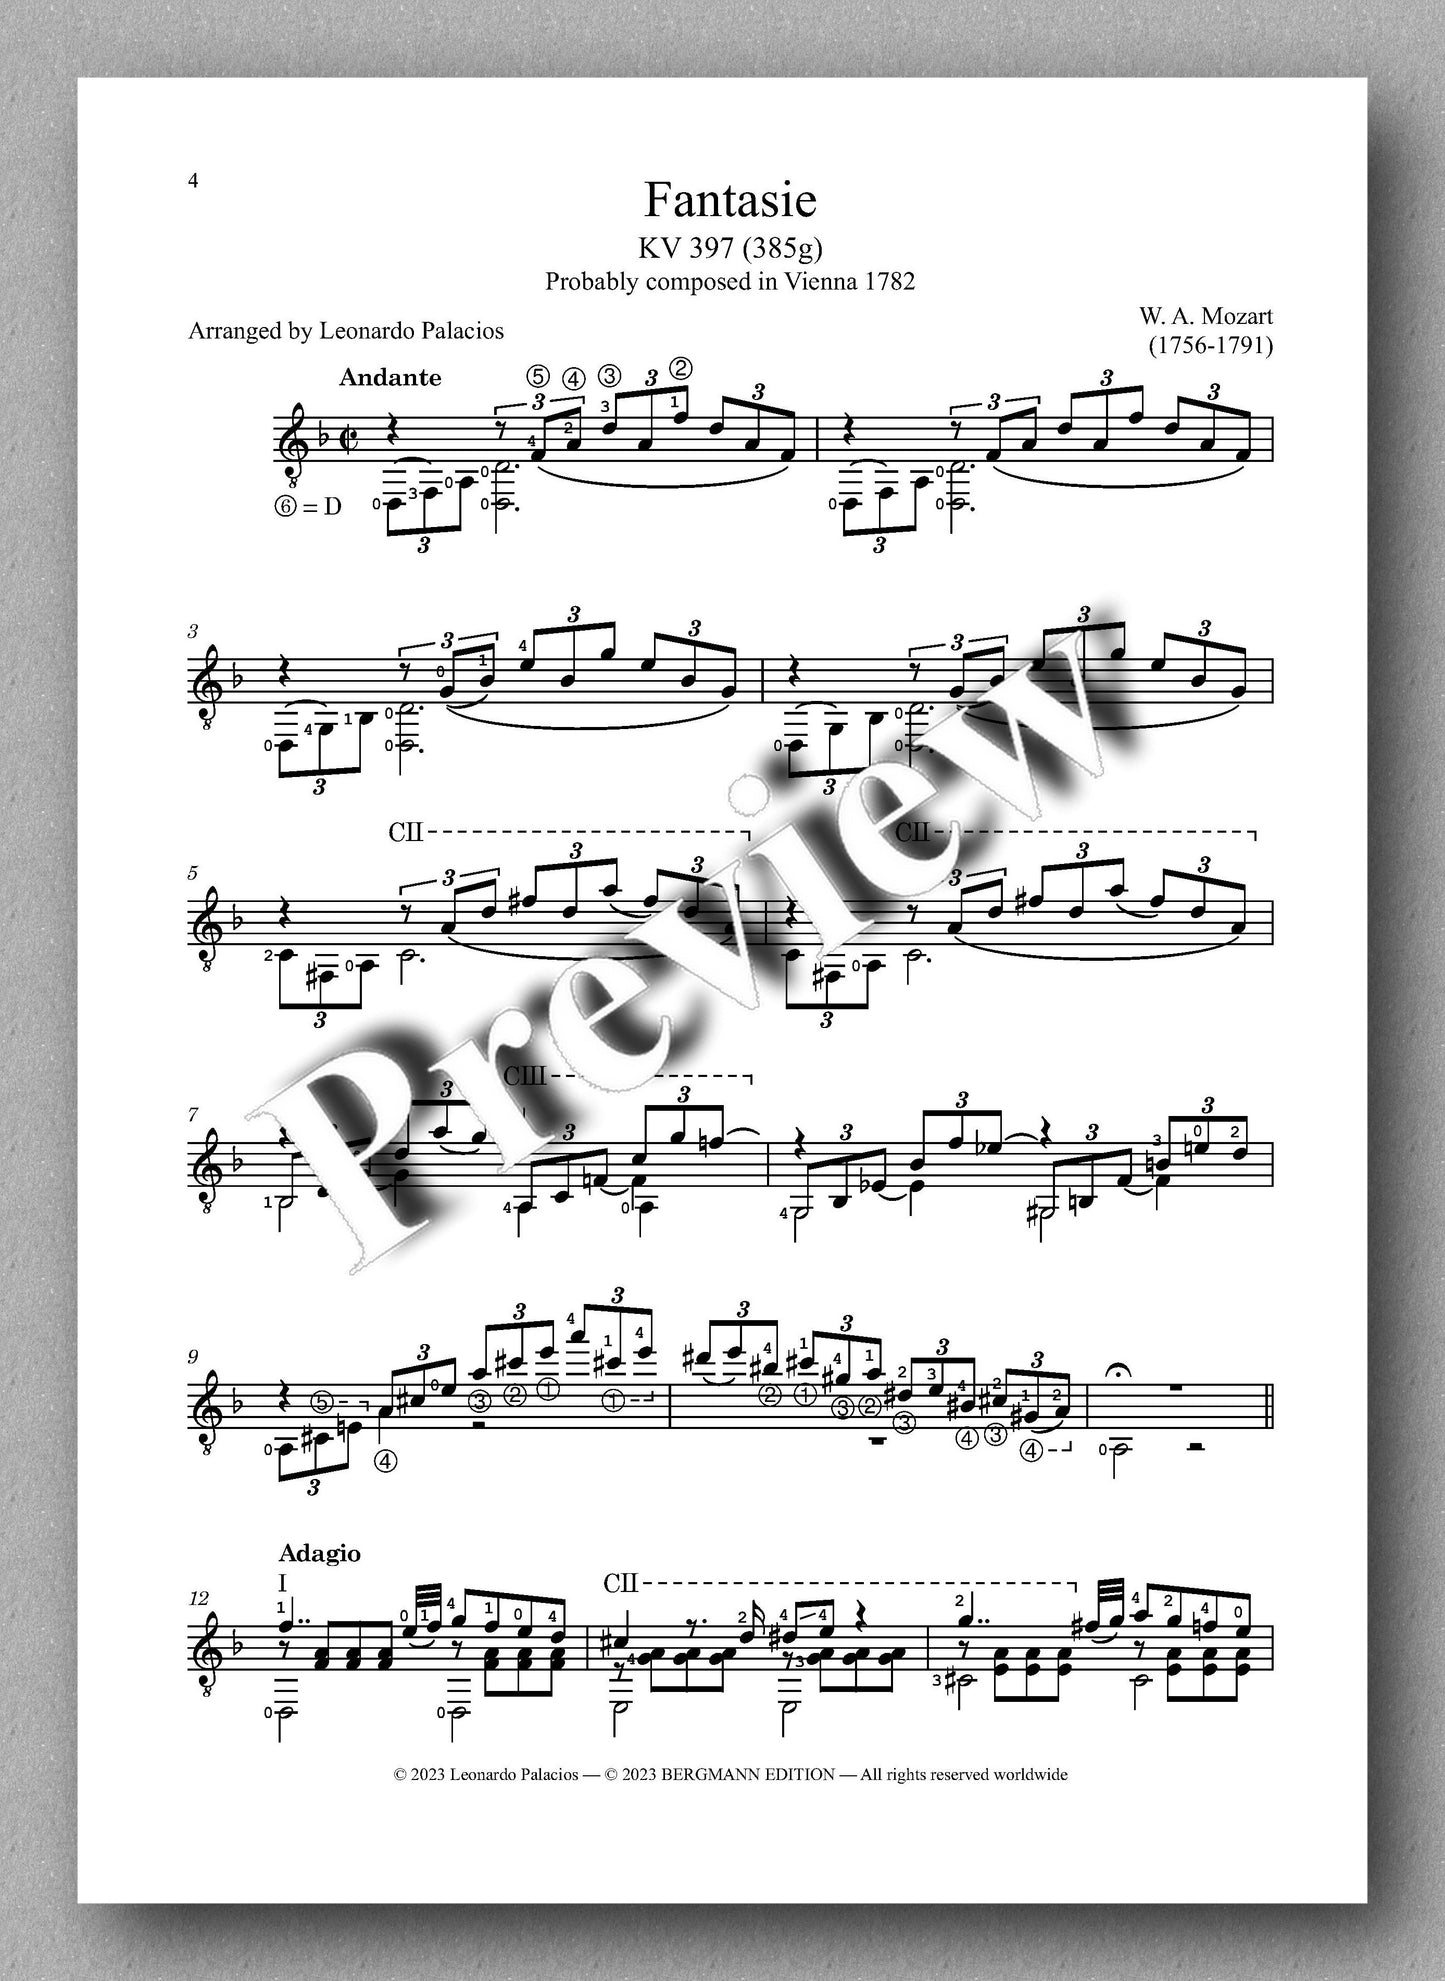 Mozart-Palacios, Fantasie, KV 397 - preview of the music score 1